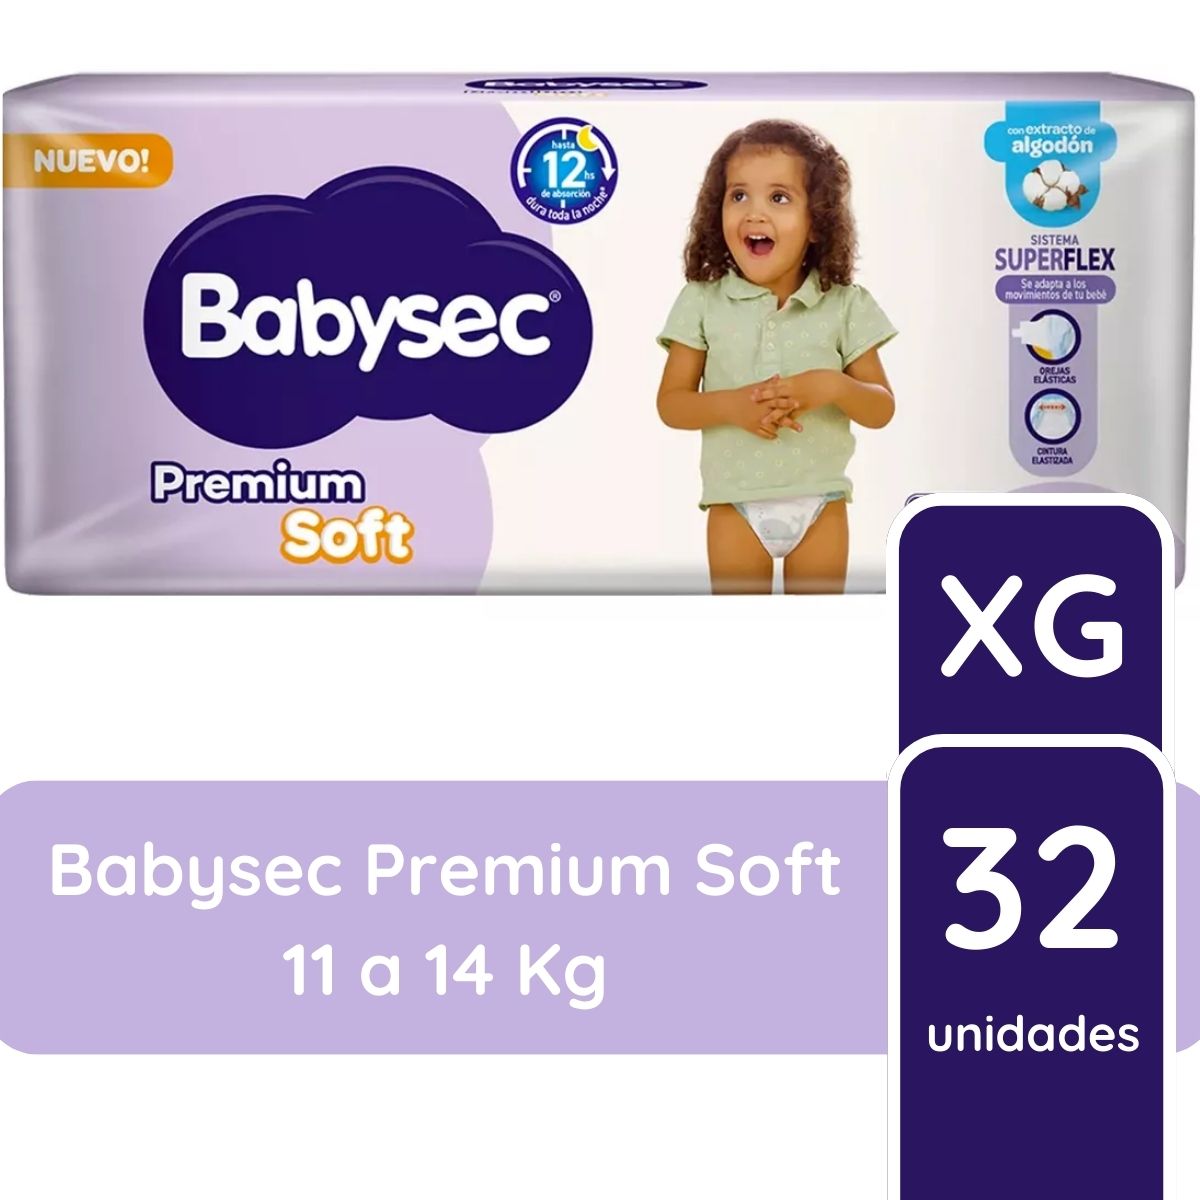 Imagen 1 de 2 de Pañales Babysec Premium Soft XG 32 unidades